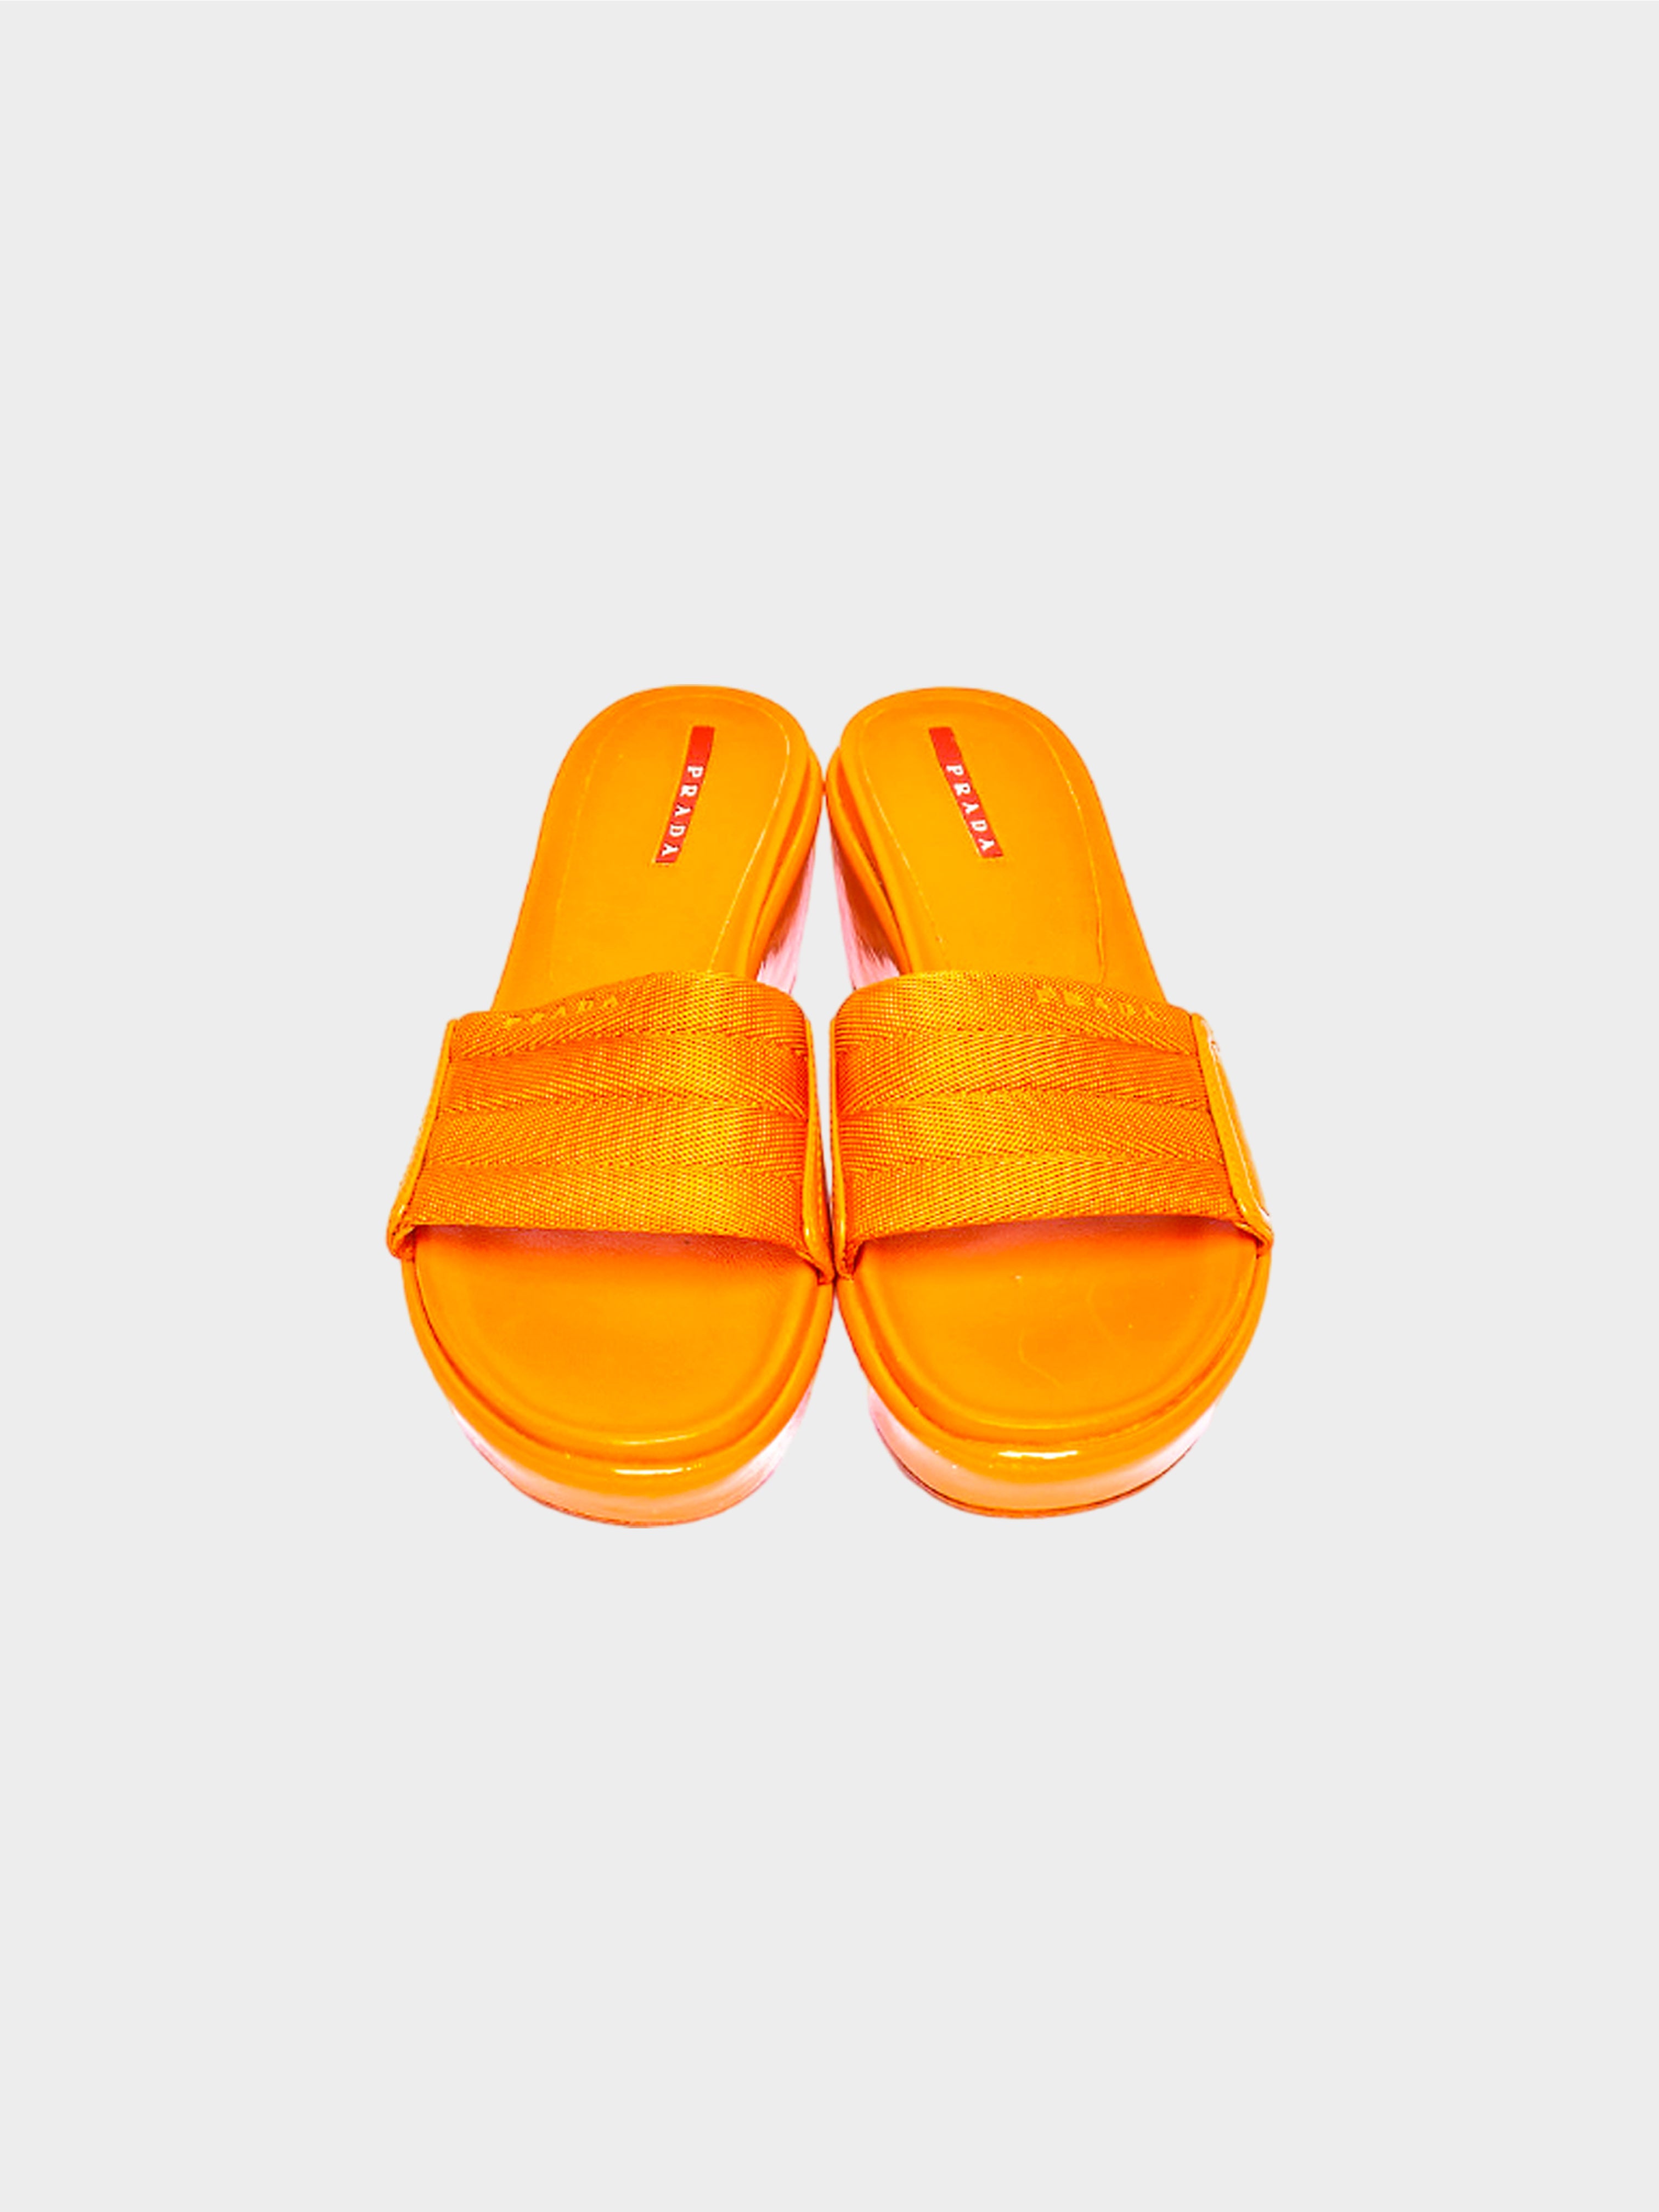 Prada Sport 2000s Orange Platform Sandals